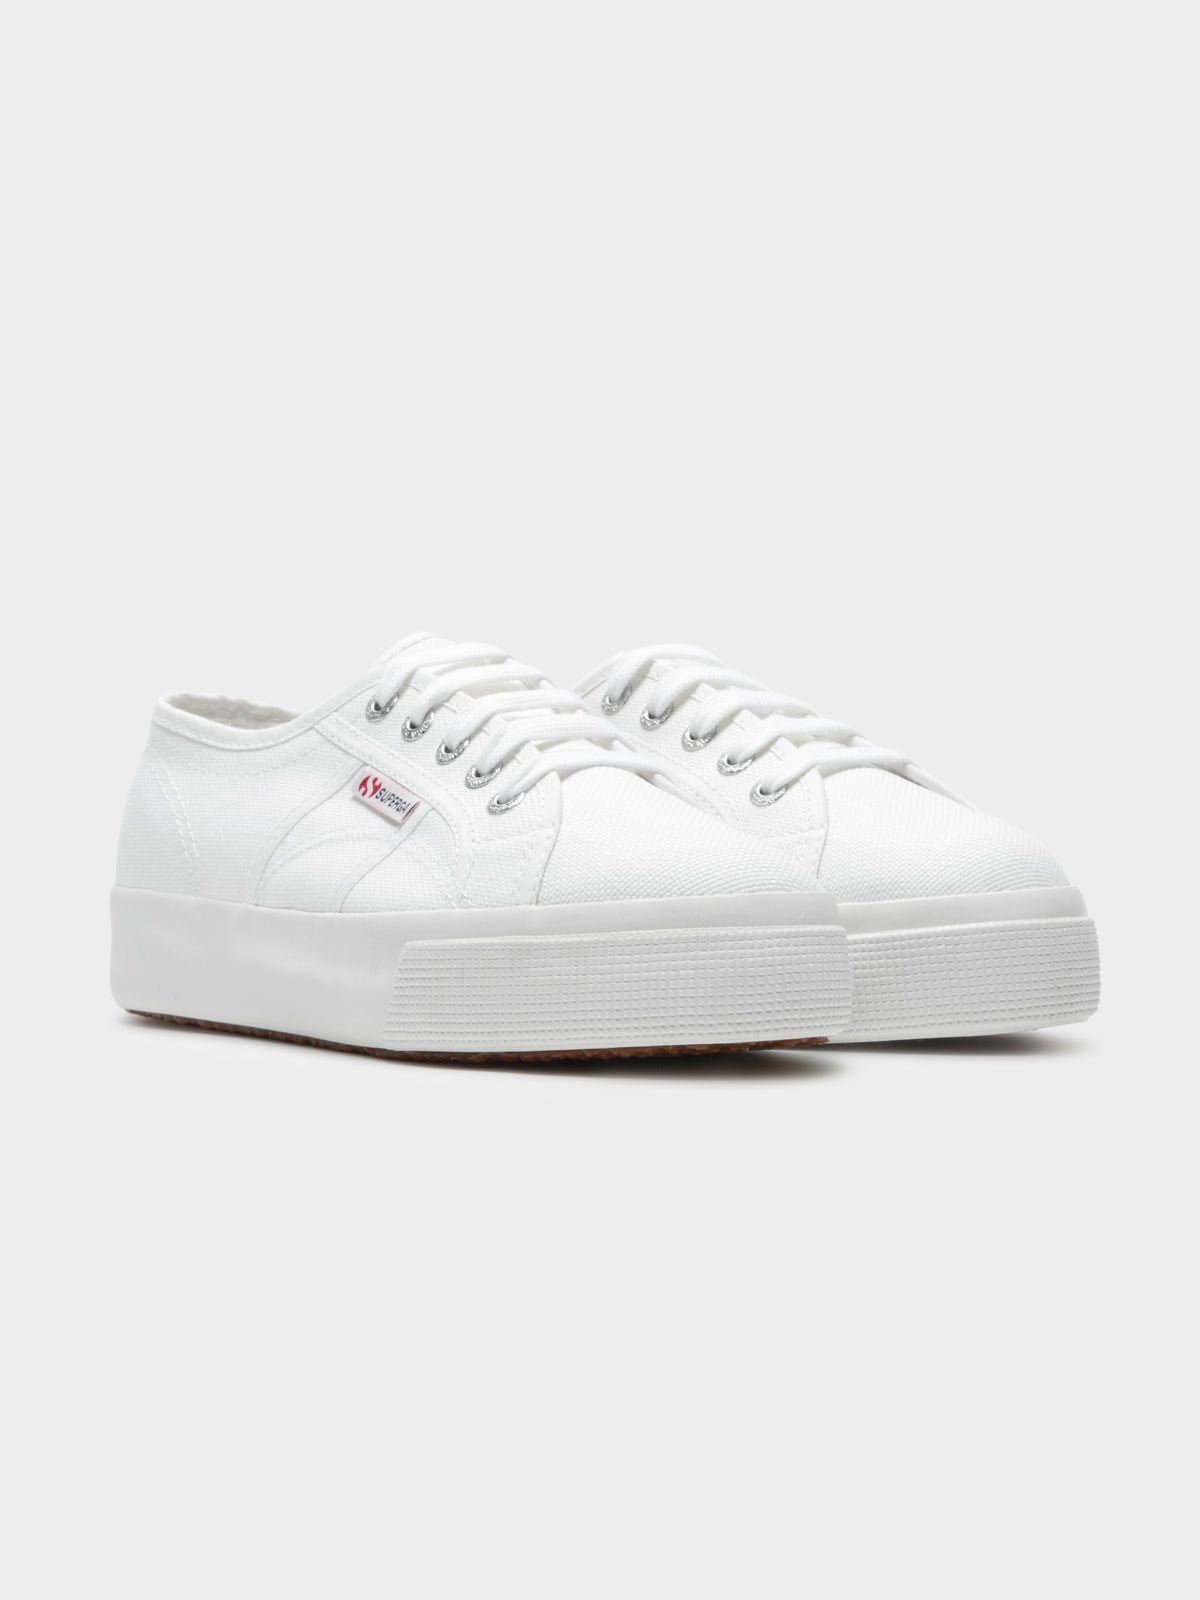 Womens 2730 Cotu Sneakers in White